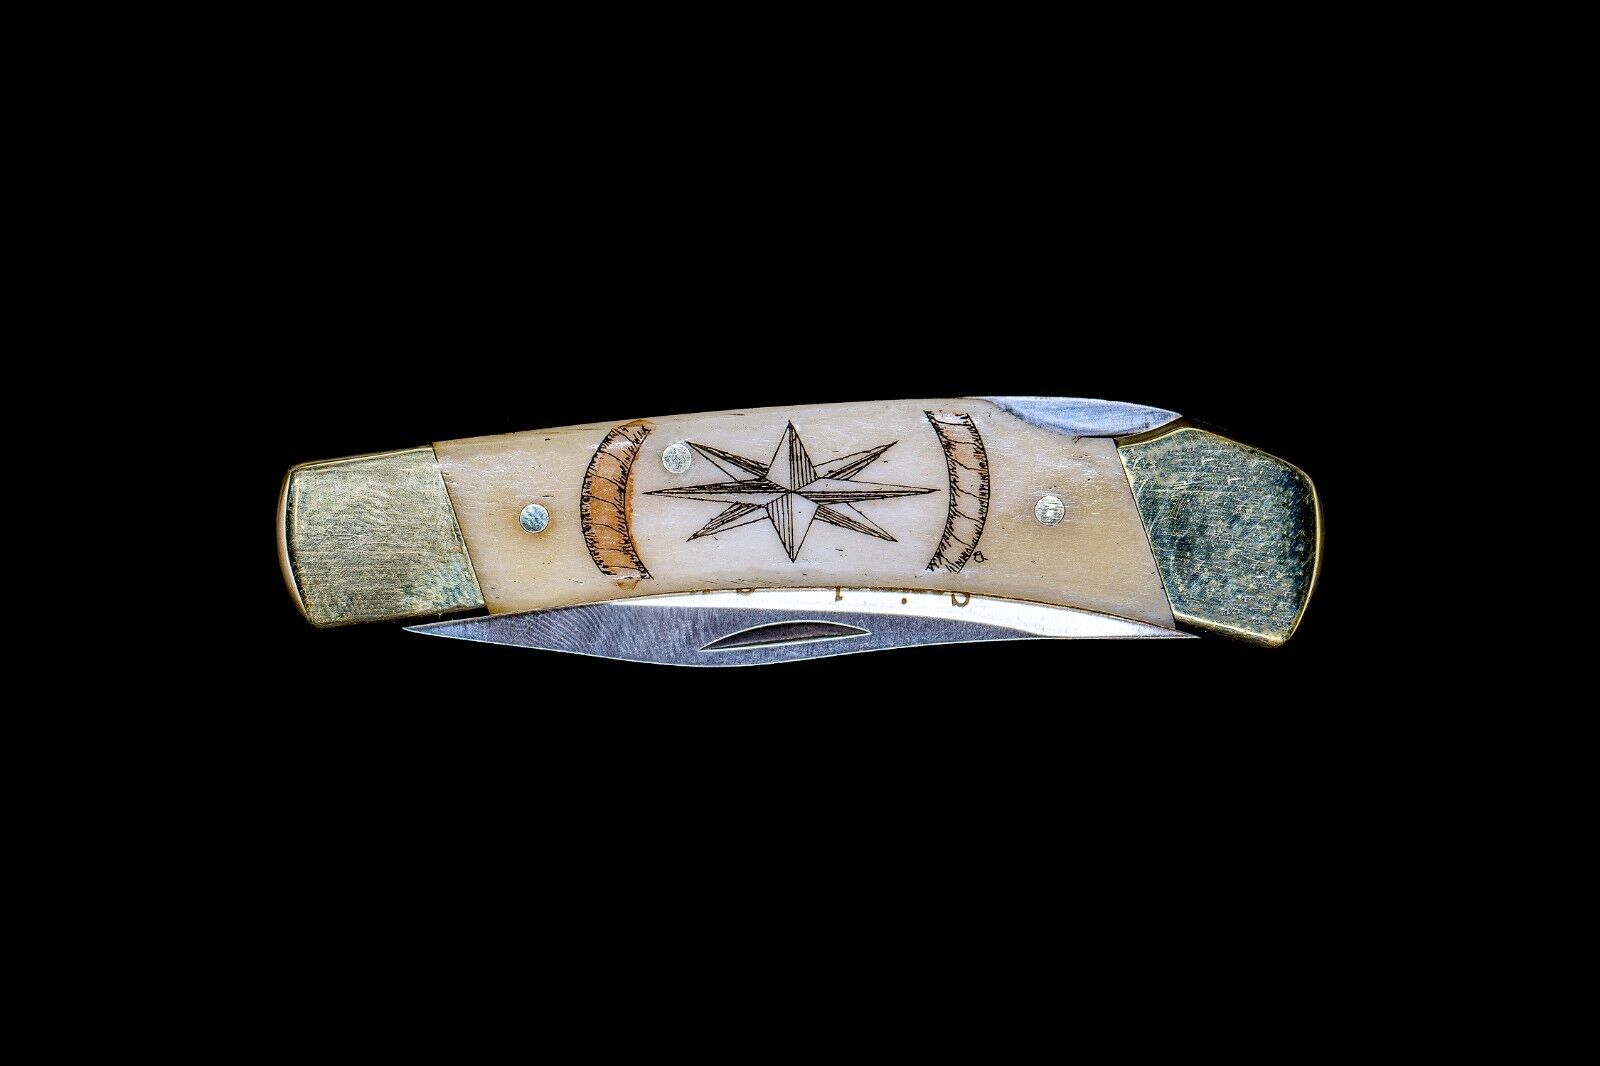 Etched Compass Rose Colored Scrimshaw Collection on Bovine Bone Large Pocket